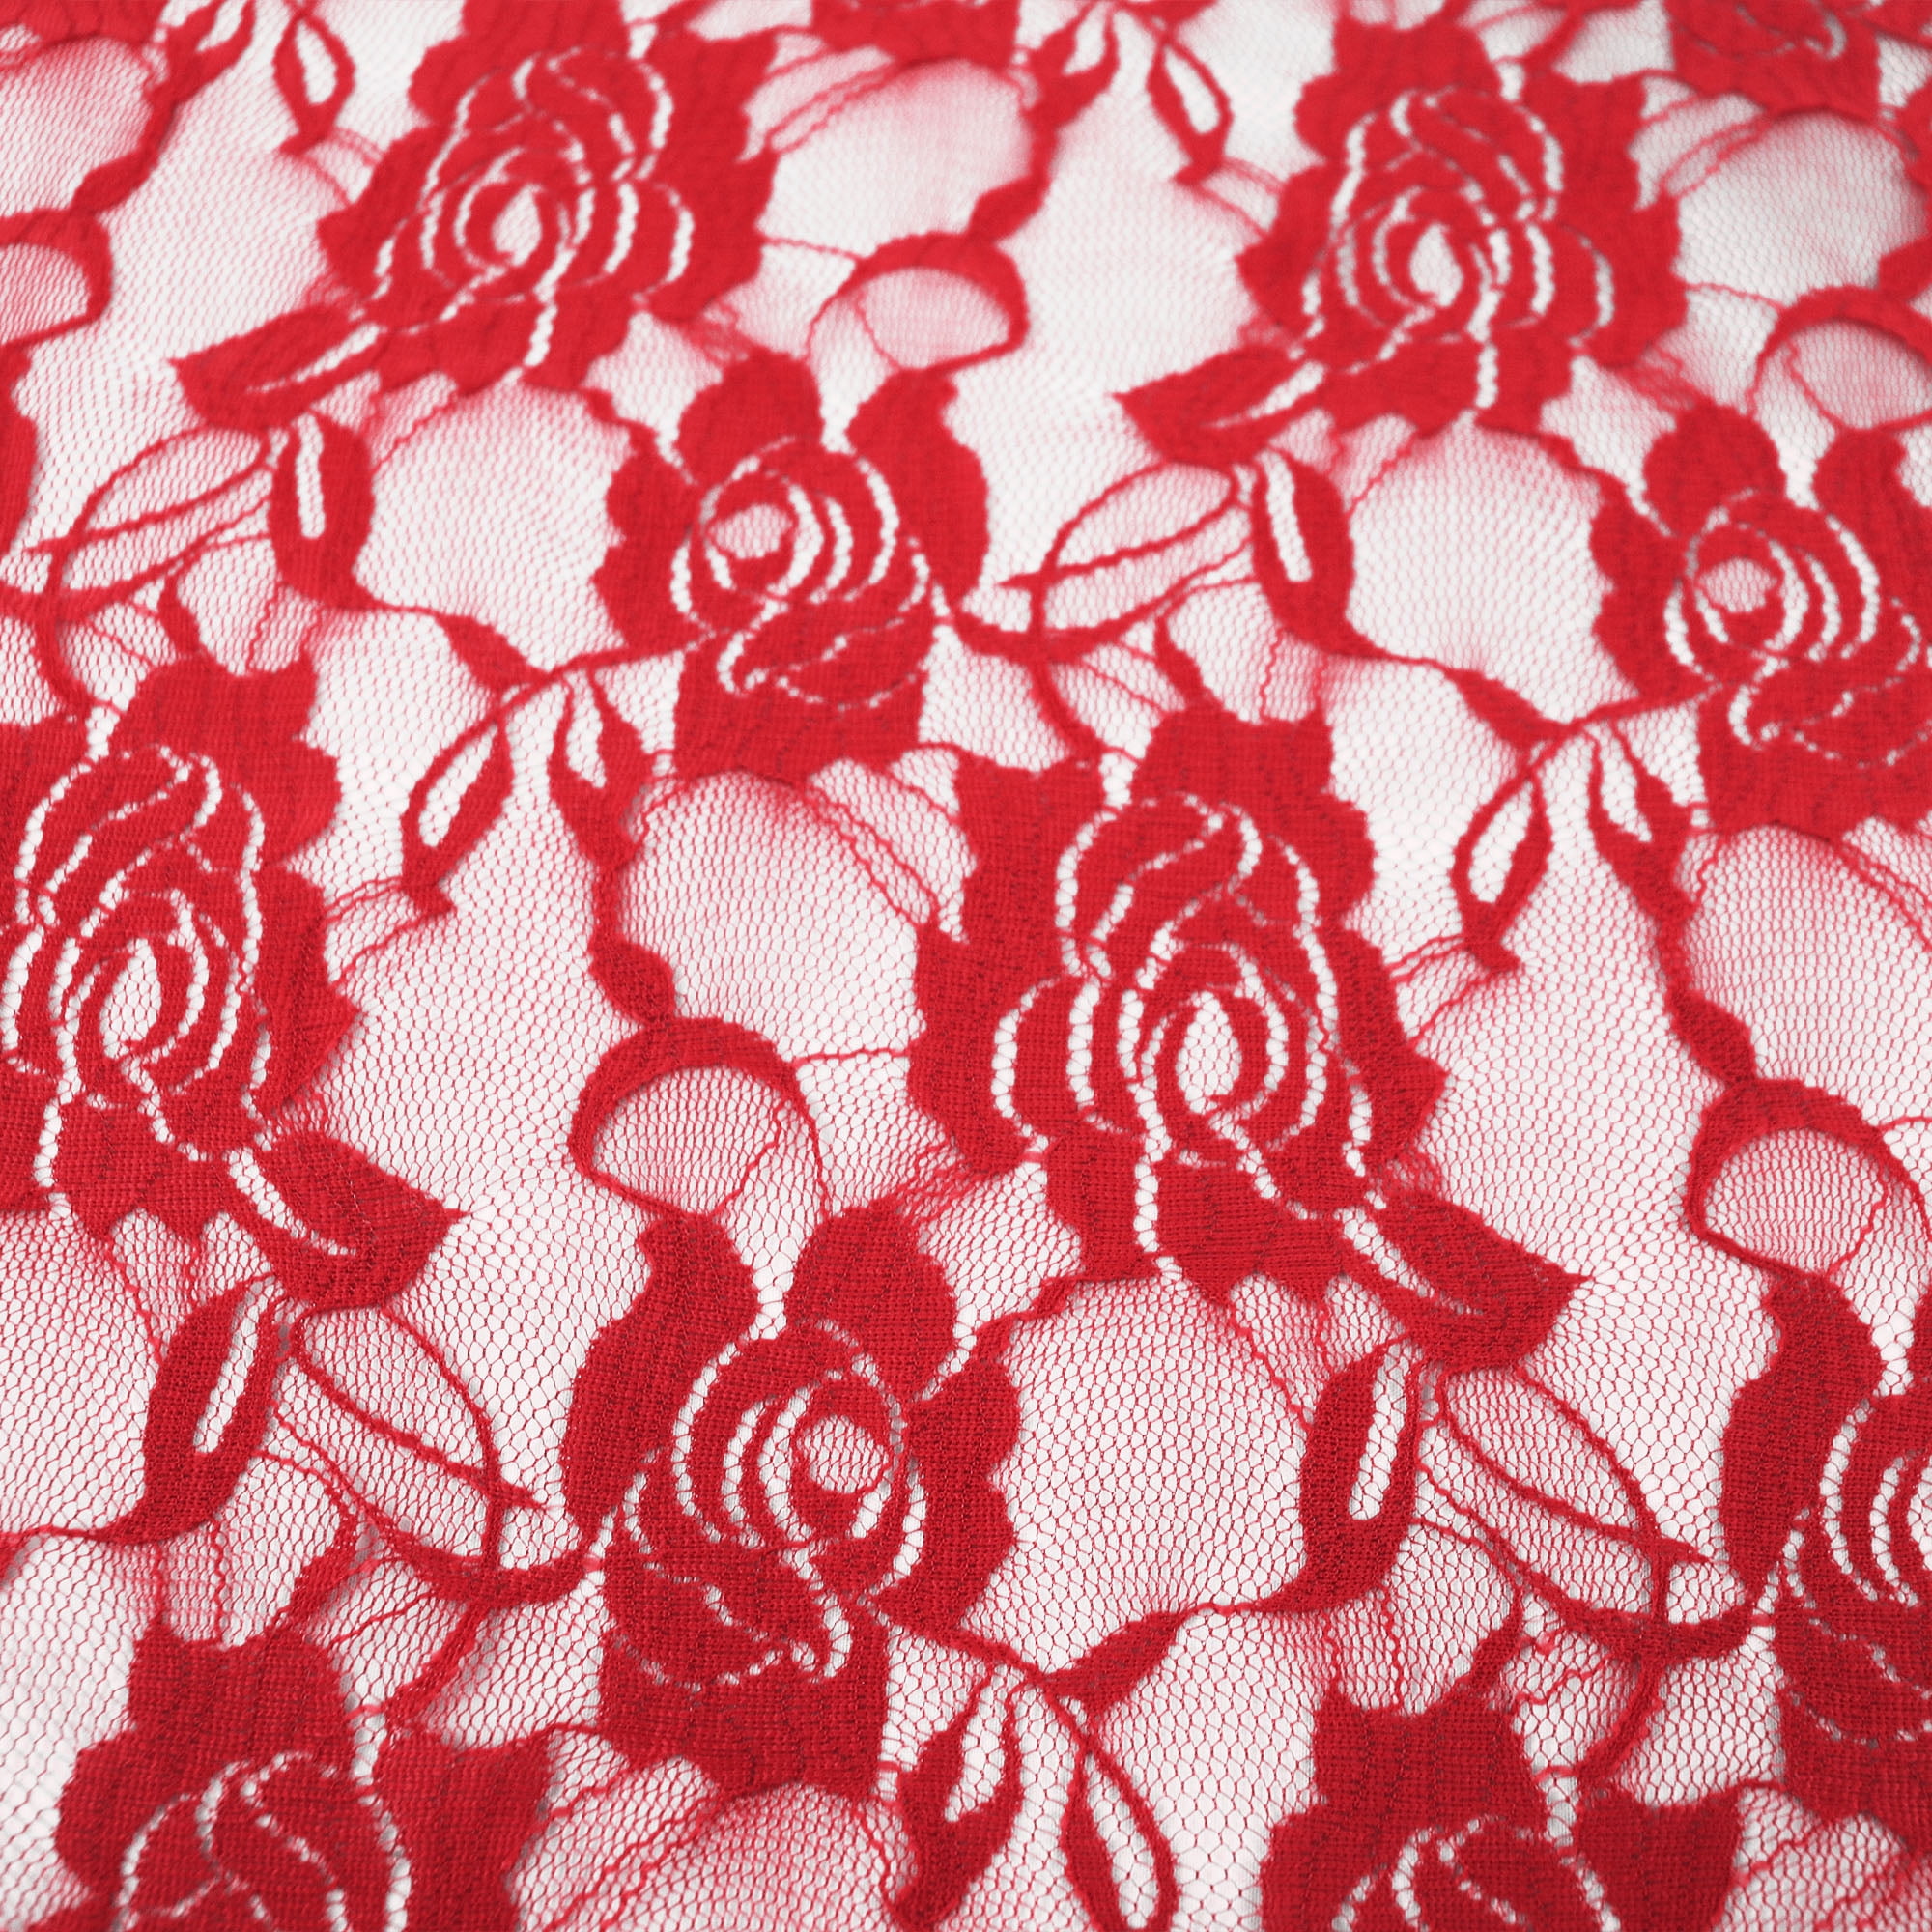 Romex Textiles Nylon Spandex Lace Fabric with Rose Design (3